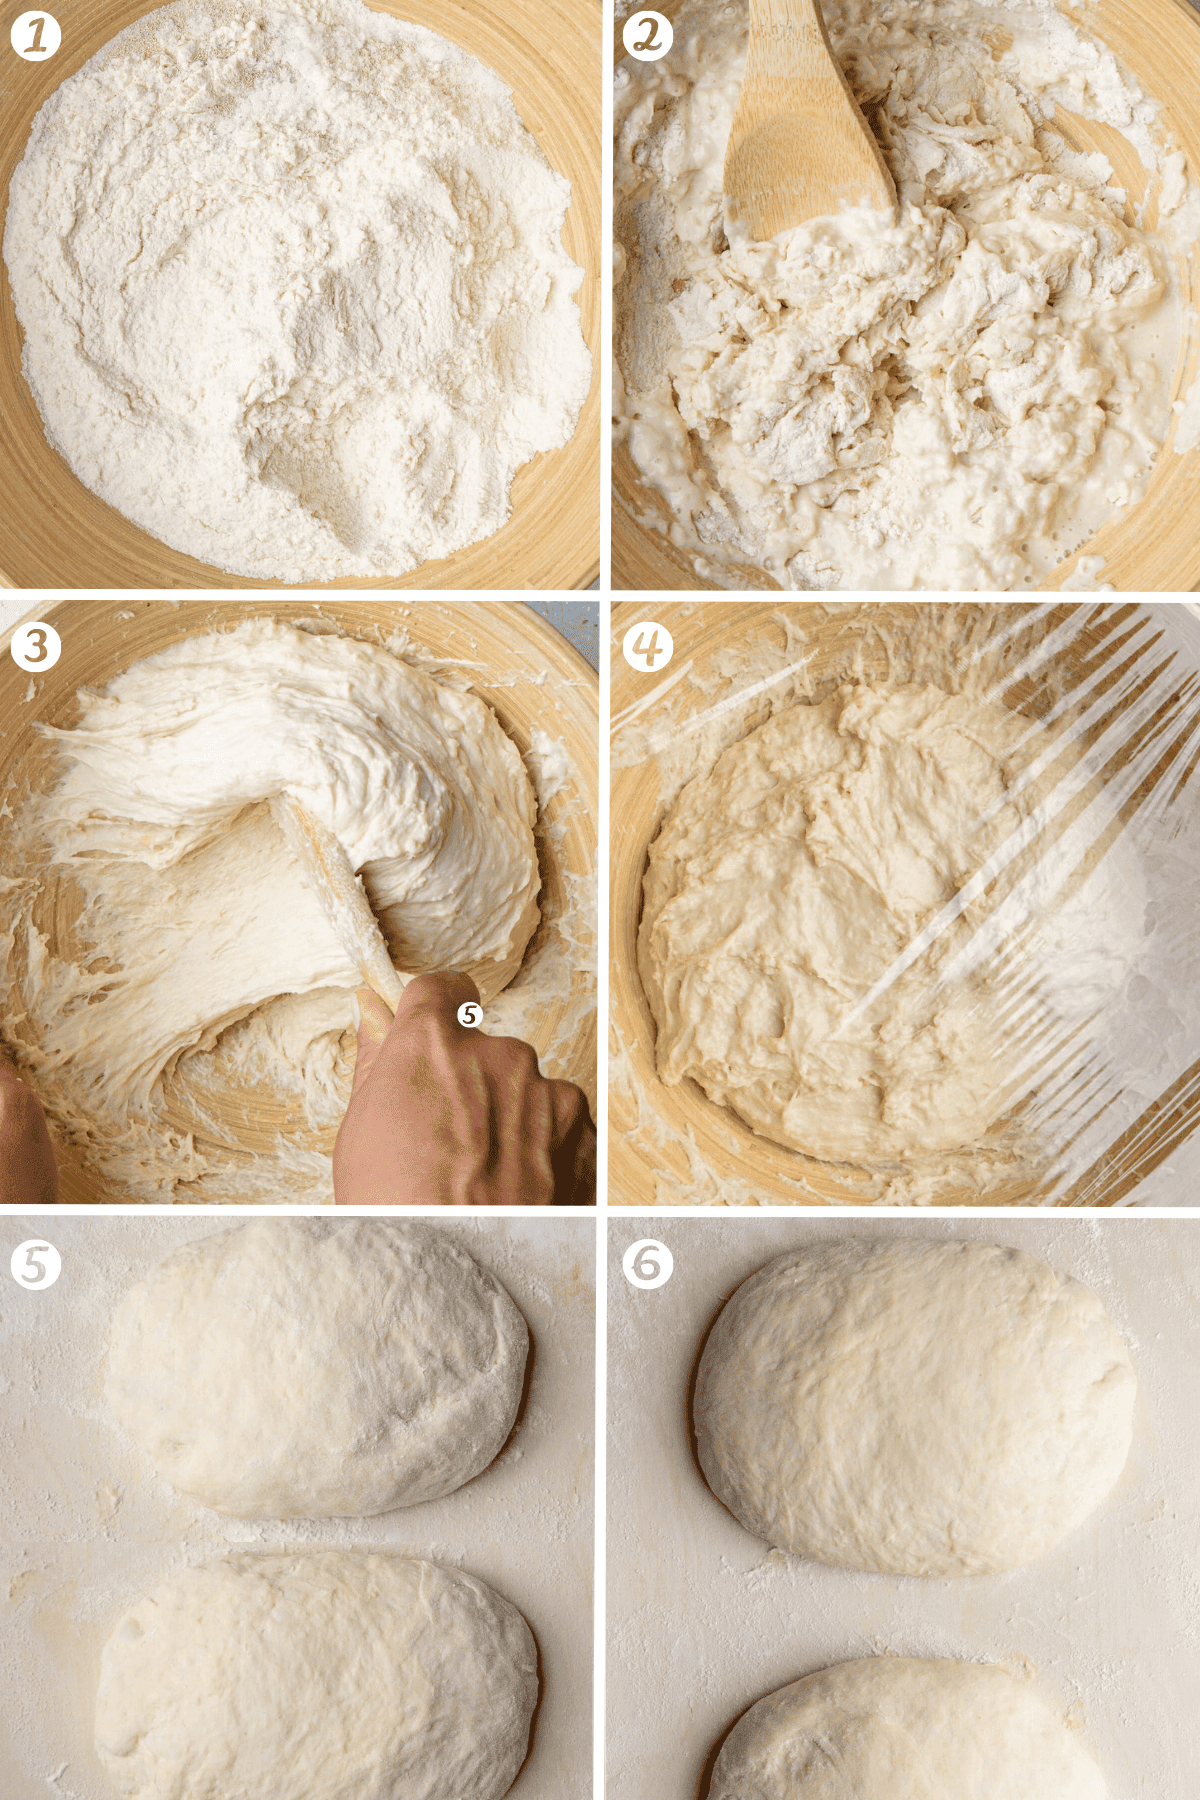 Steps on how to prepare the dough to make Persian Barbari